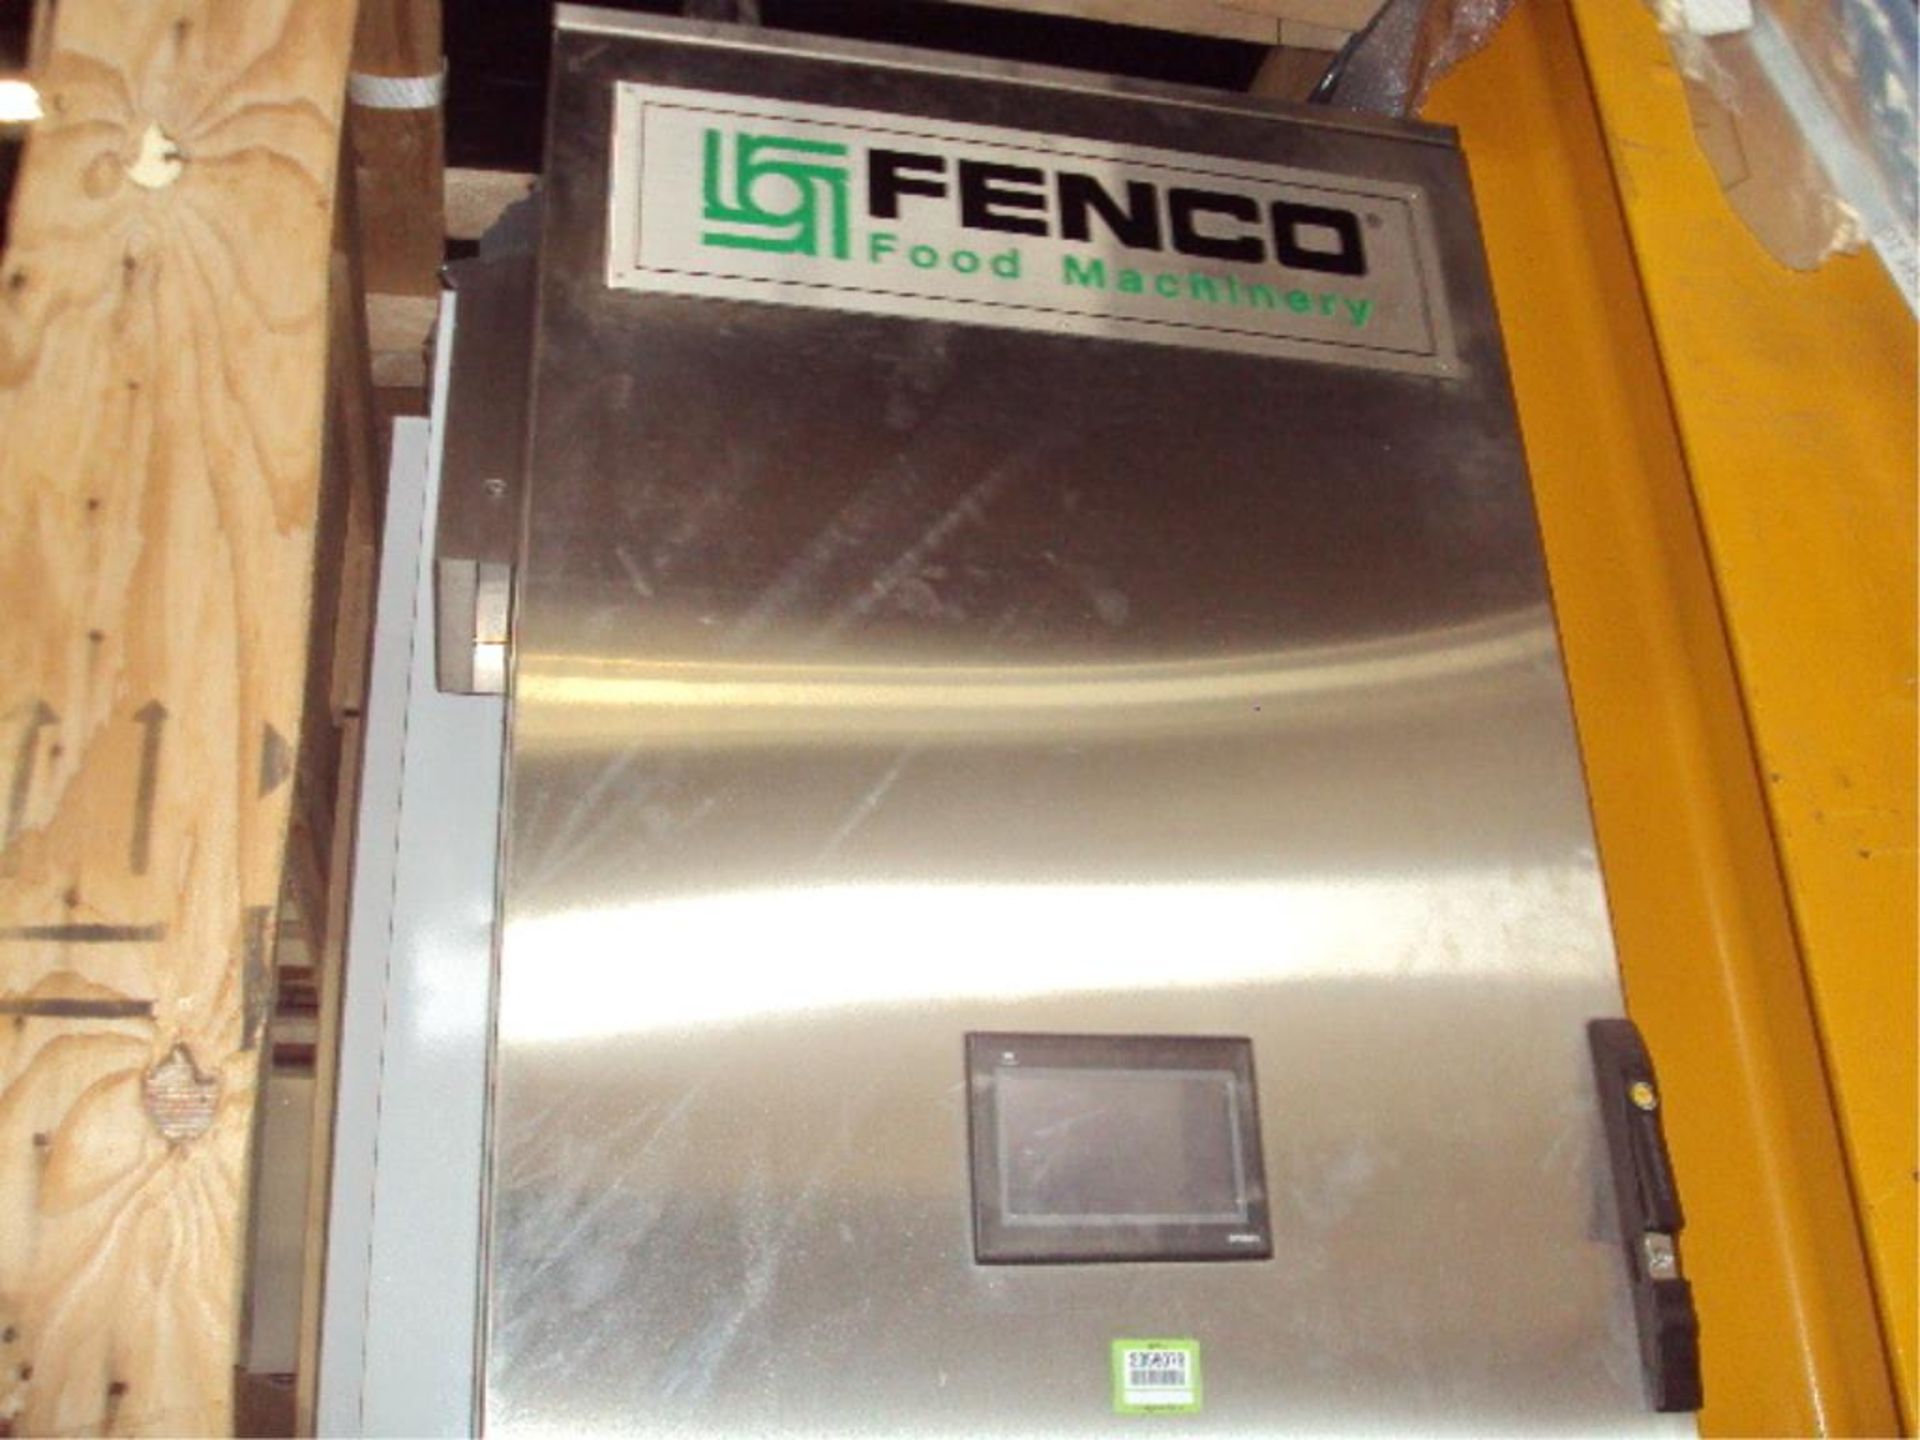 S.T. Macchine Fenco Food Machinery Equipment - Image 16 of 30